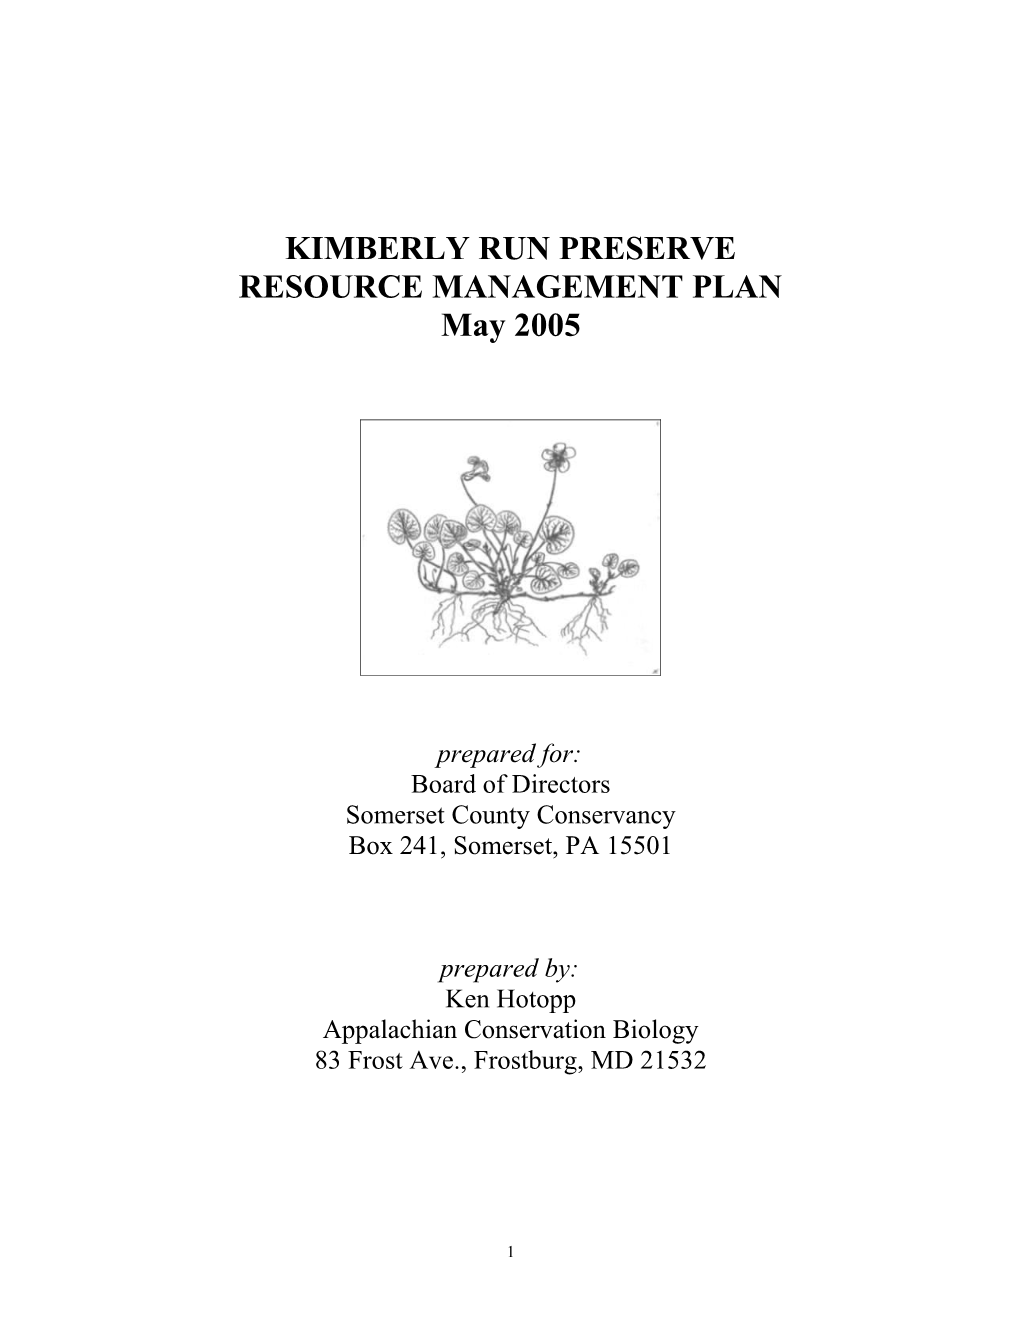 Kimberly Run Preserve